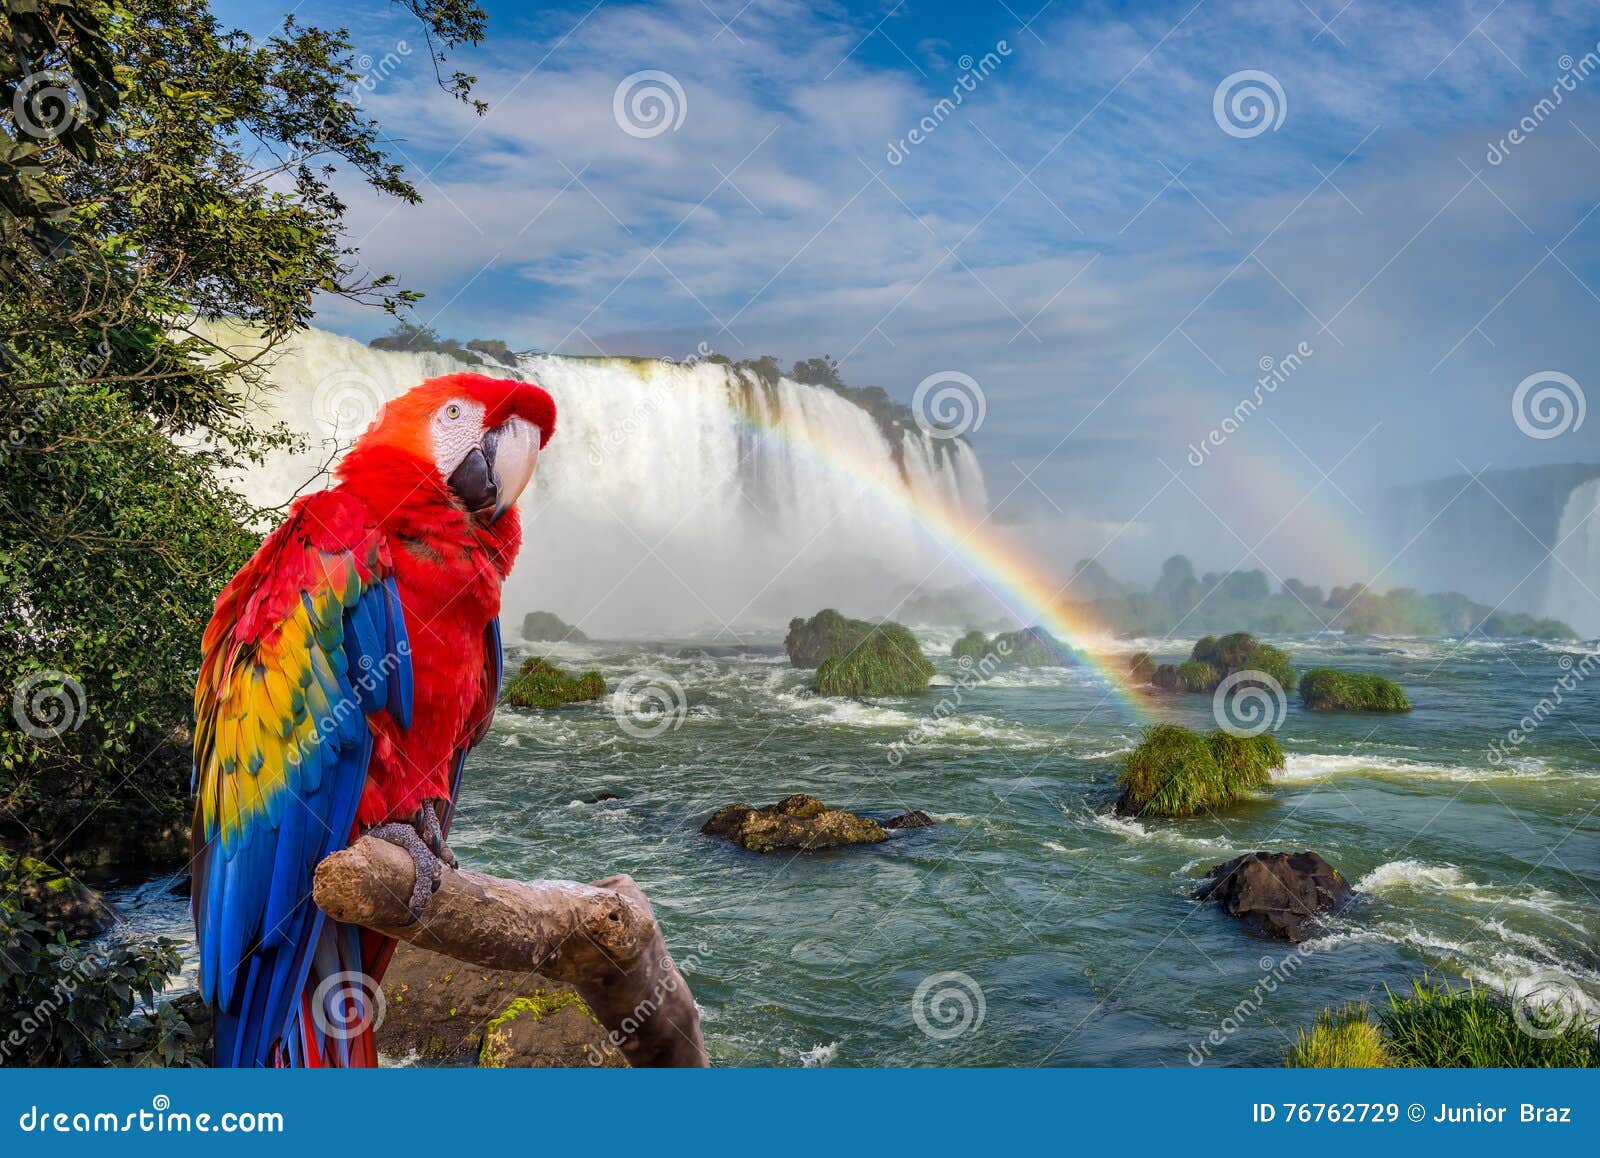 the macaw parrot at the cataratas of iguacu